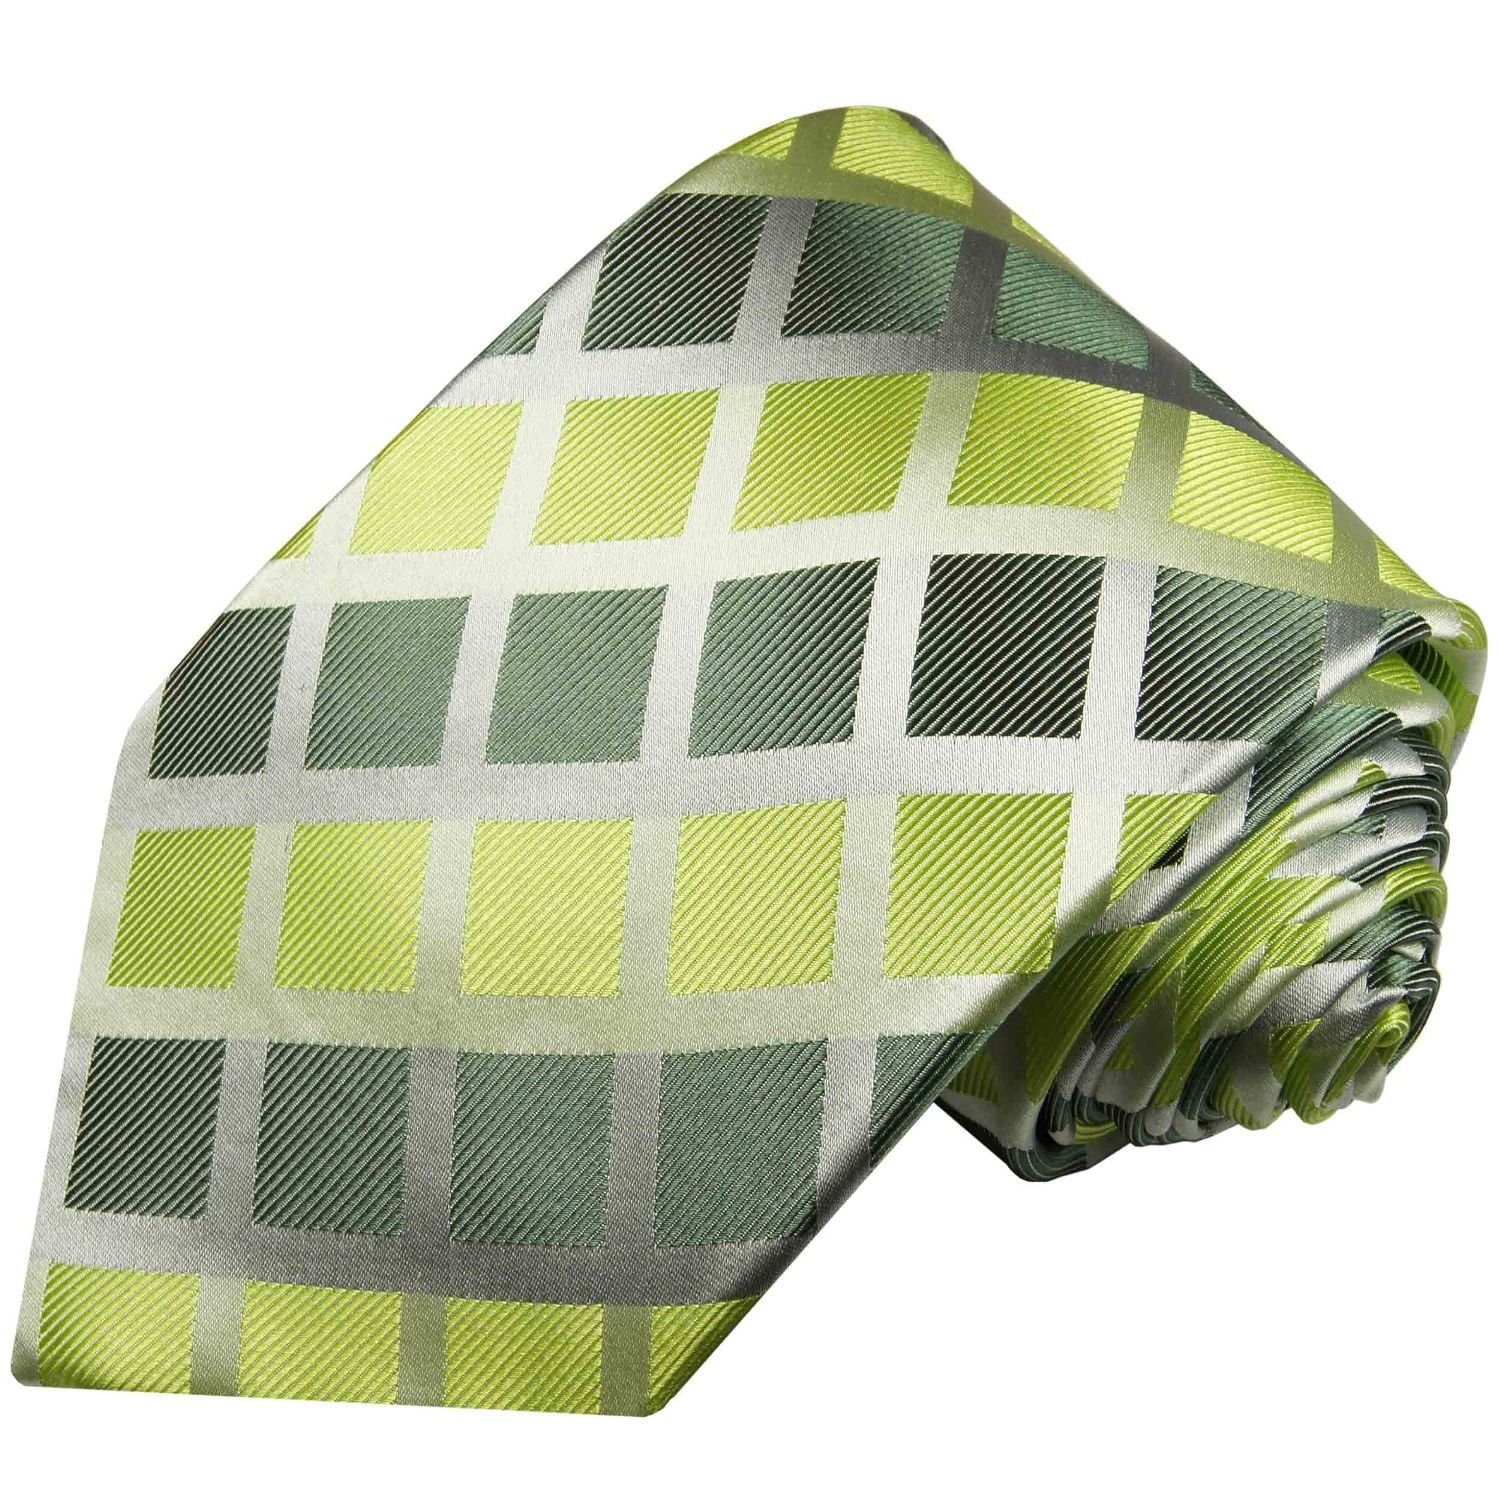 Seide Krawatte (6cm), Schmal Malone Seidenkrawatte grün 100% kariert Herren modern 460 Schlips Paul